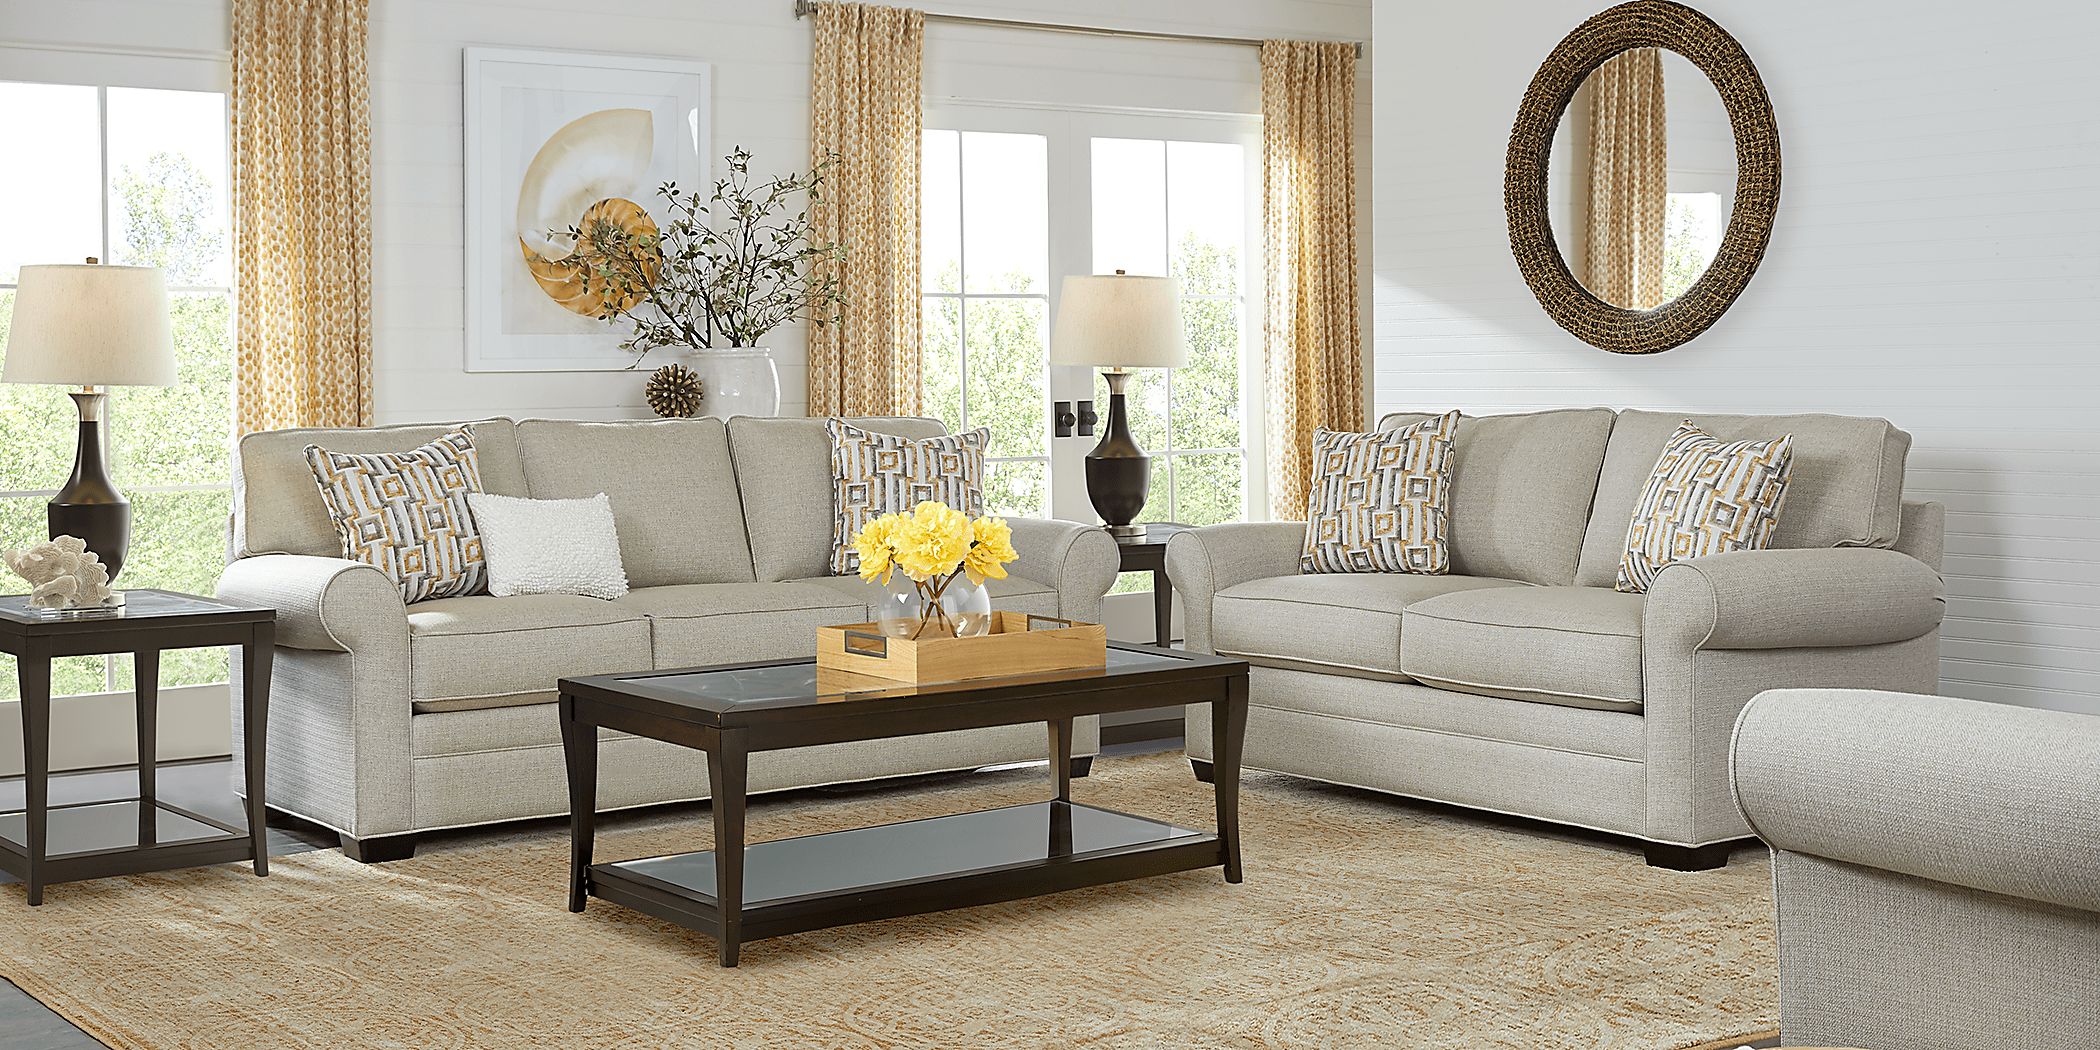 Cindy Crawford Home Bellingham Sand Textured 7 Pc Living Room with Gel Foam Sleeper Sofa